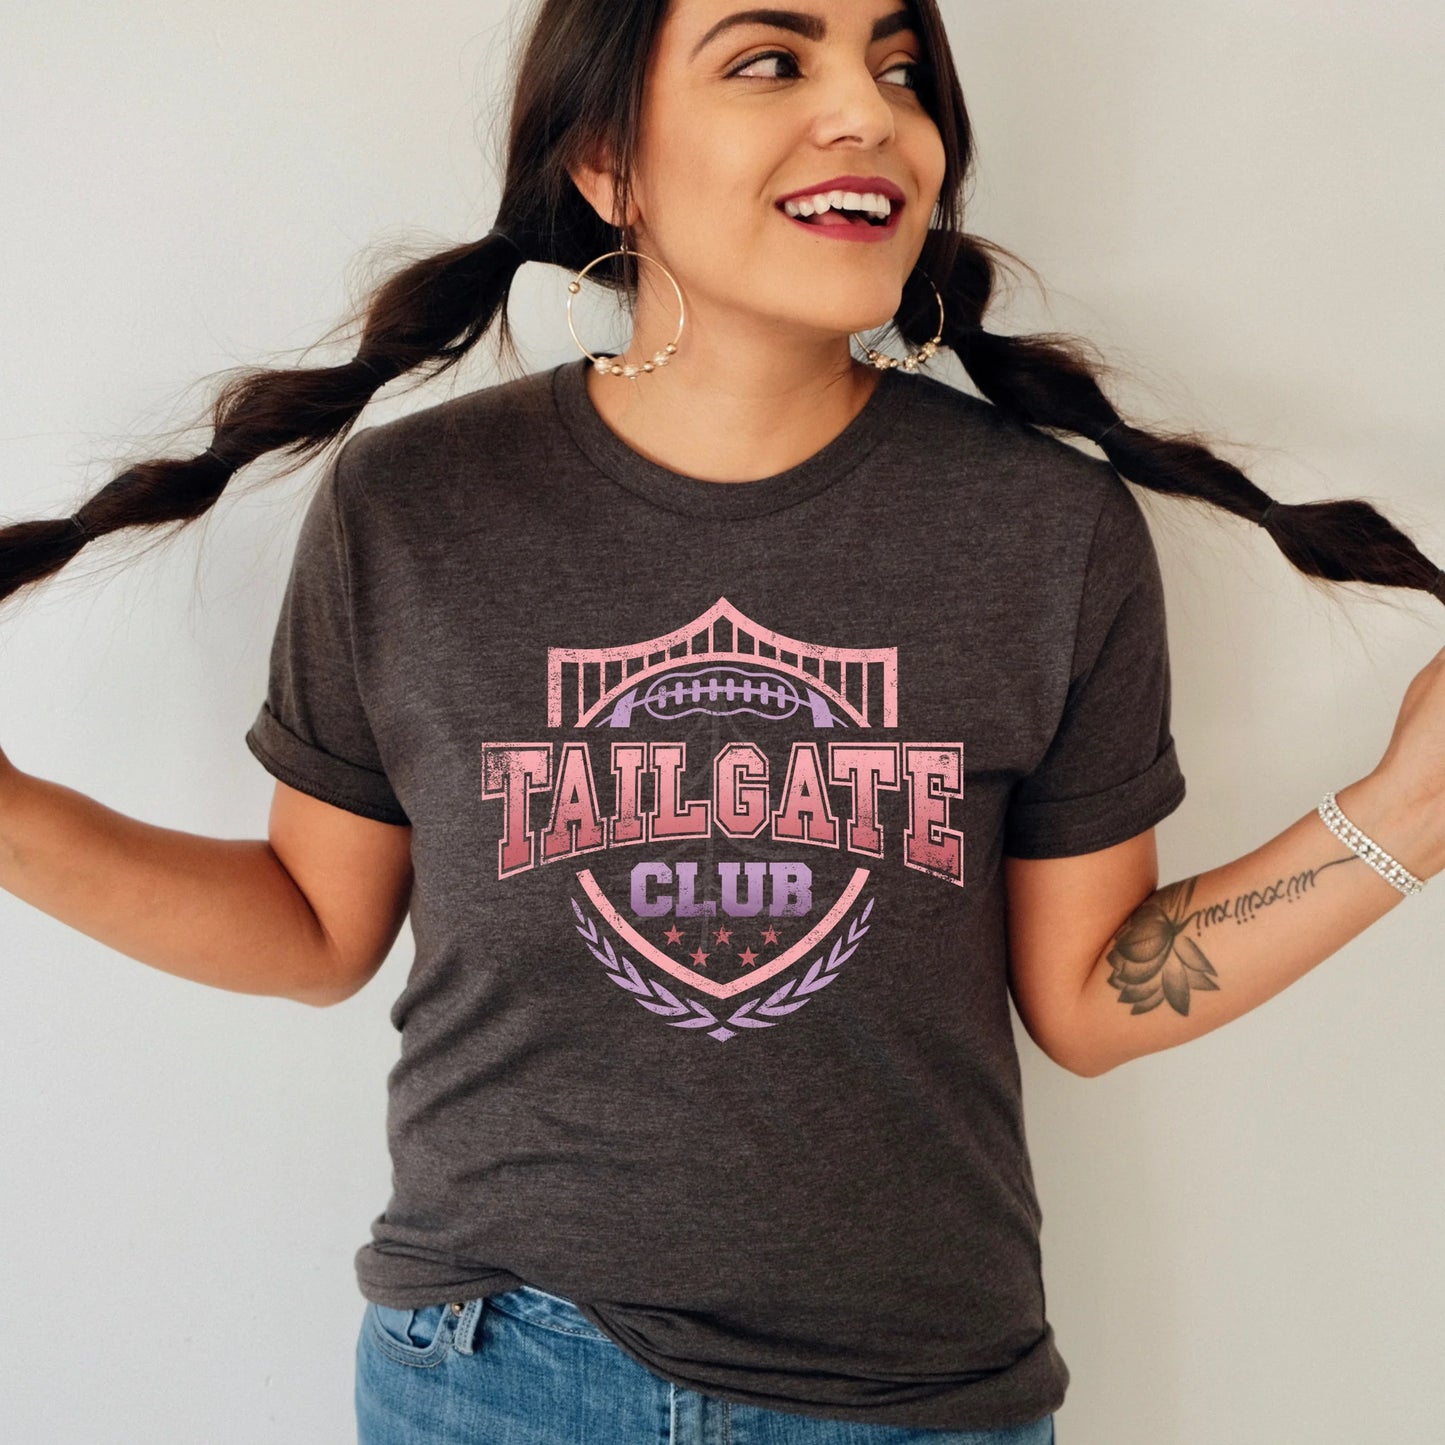 TAILGATE CLUB